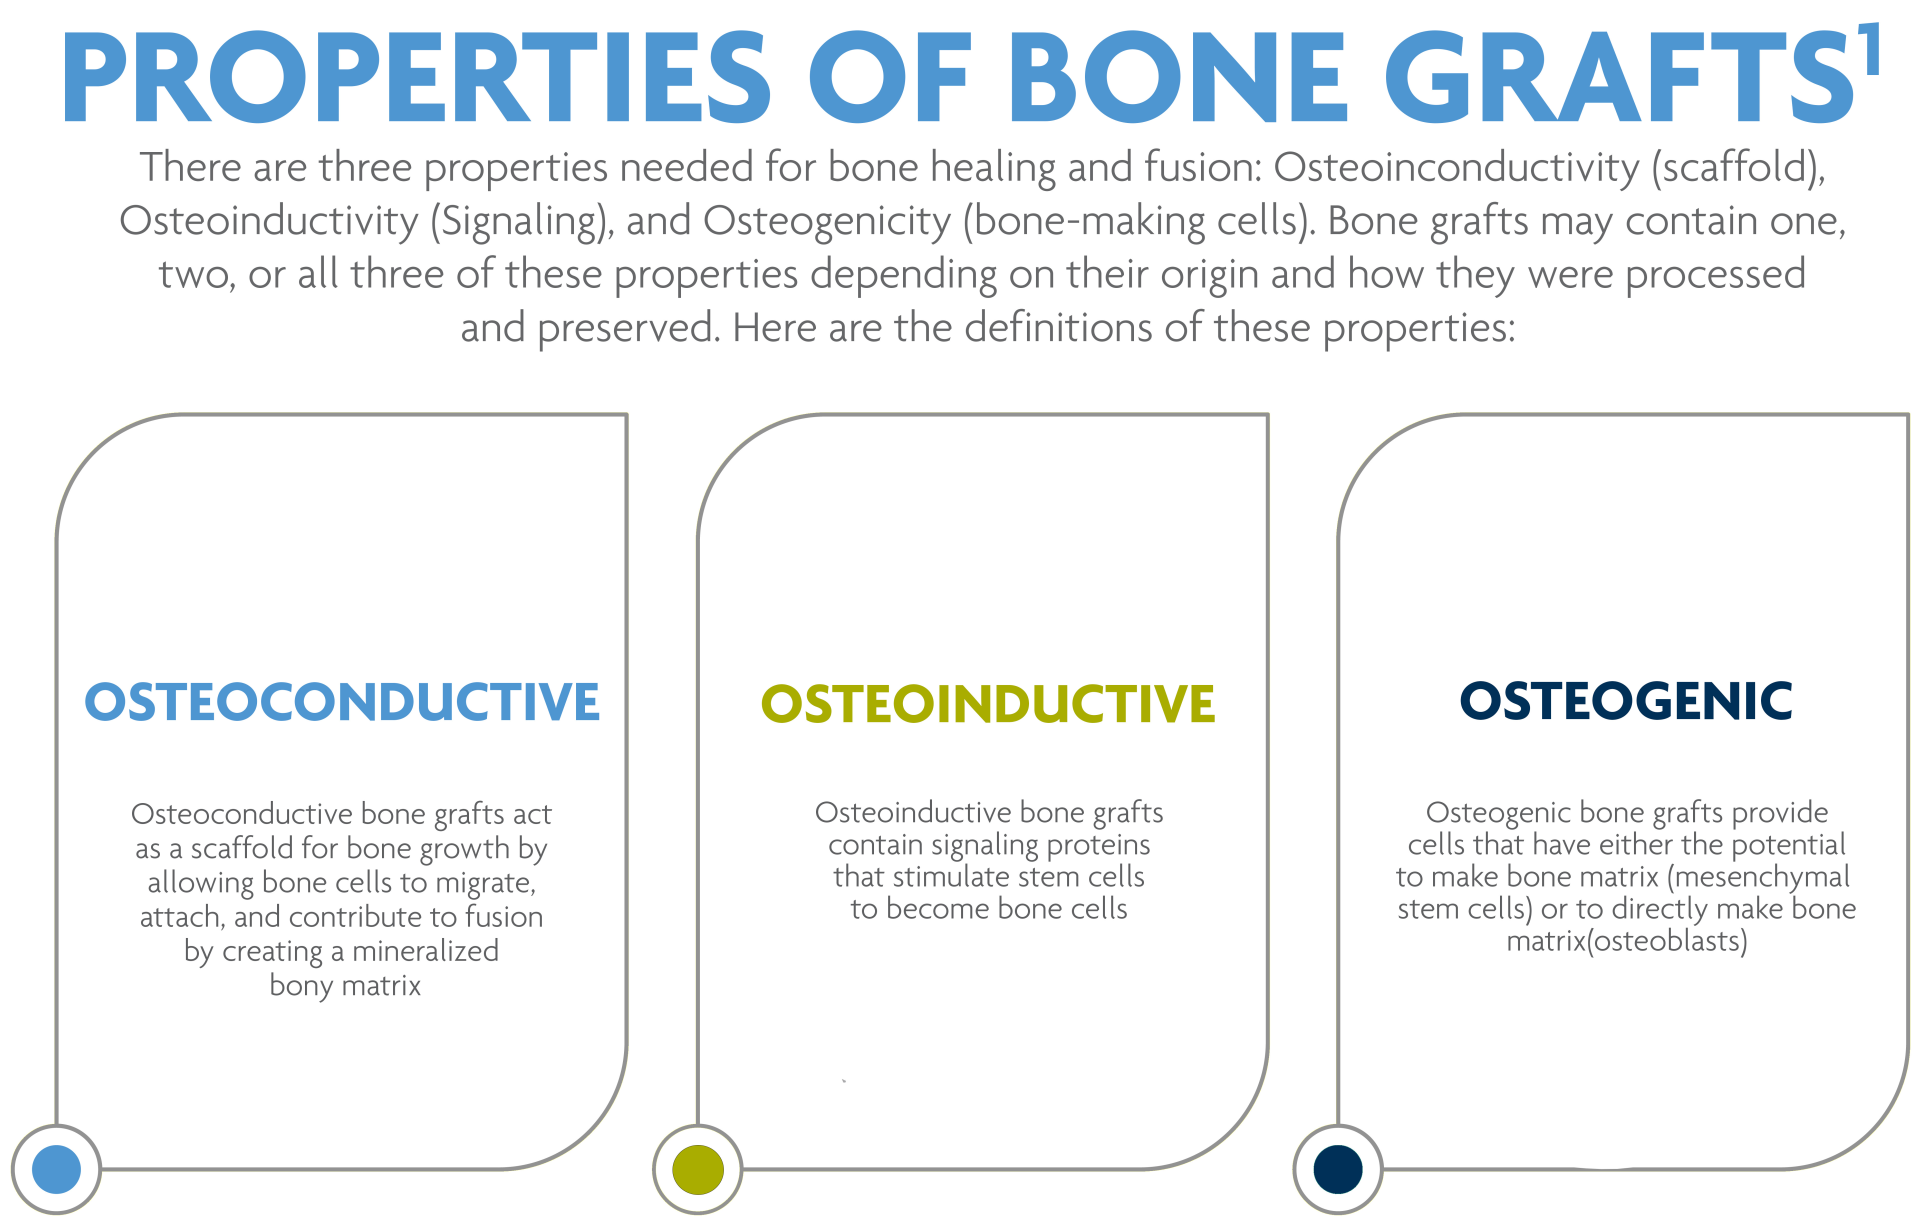 Properties of bone grafts